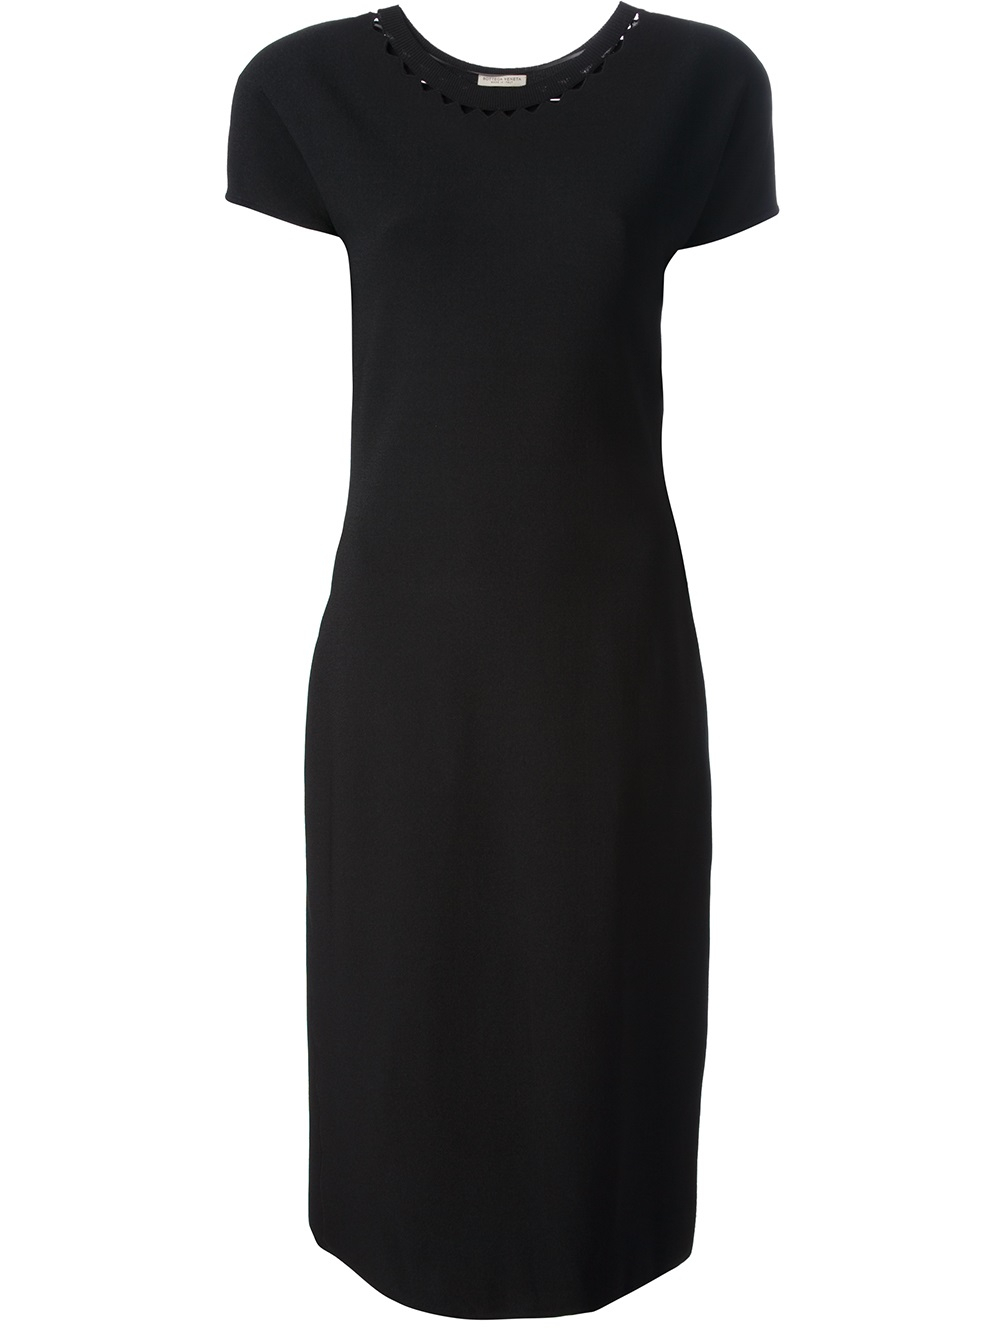 Bottega Veneta Diamond Cutout Collar Dress in Black - Lyst